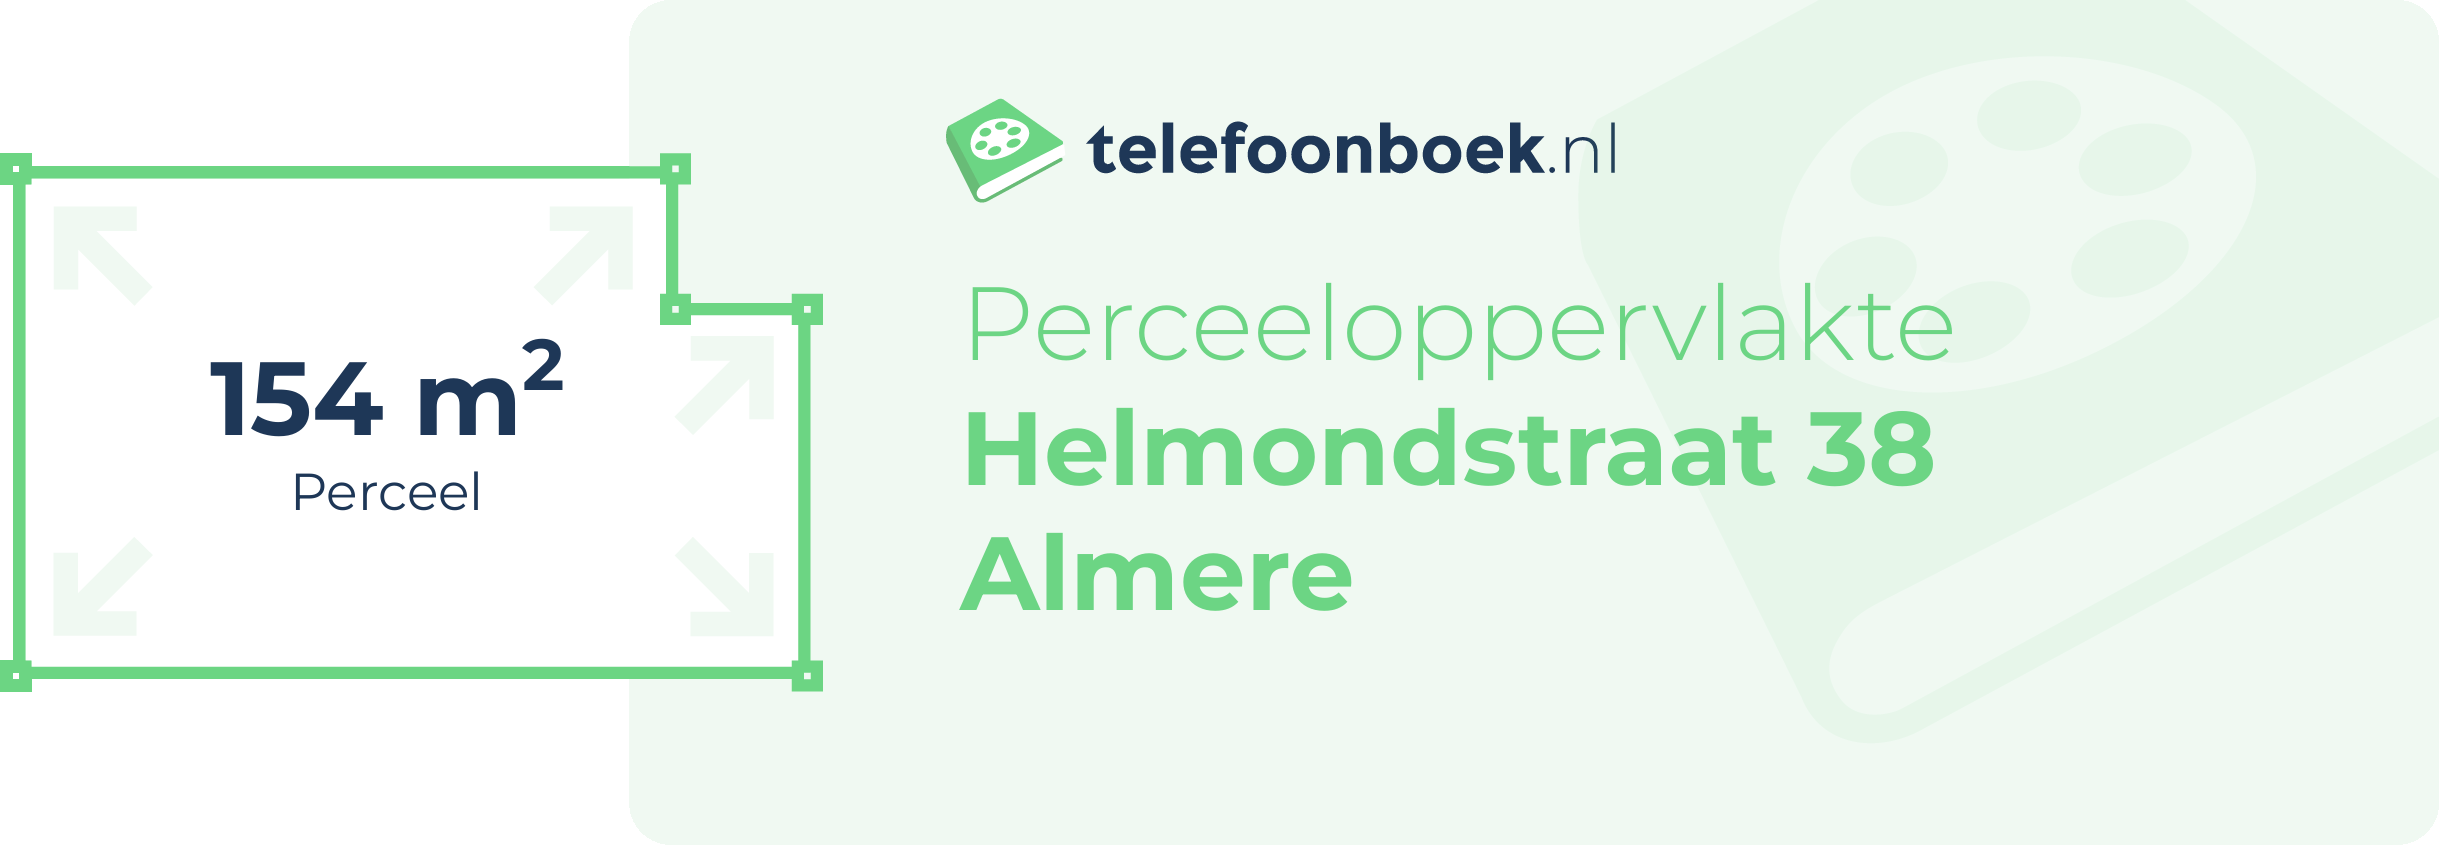 Perceeloppervlakte Helmondstraat 38 Almere